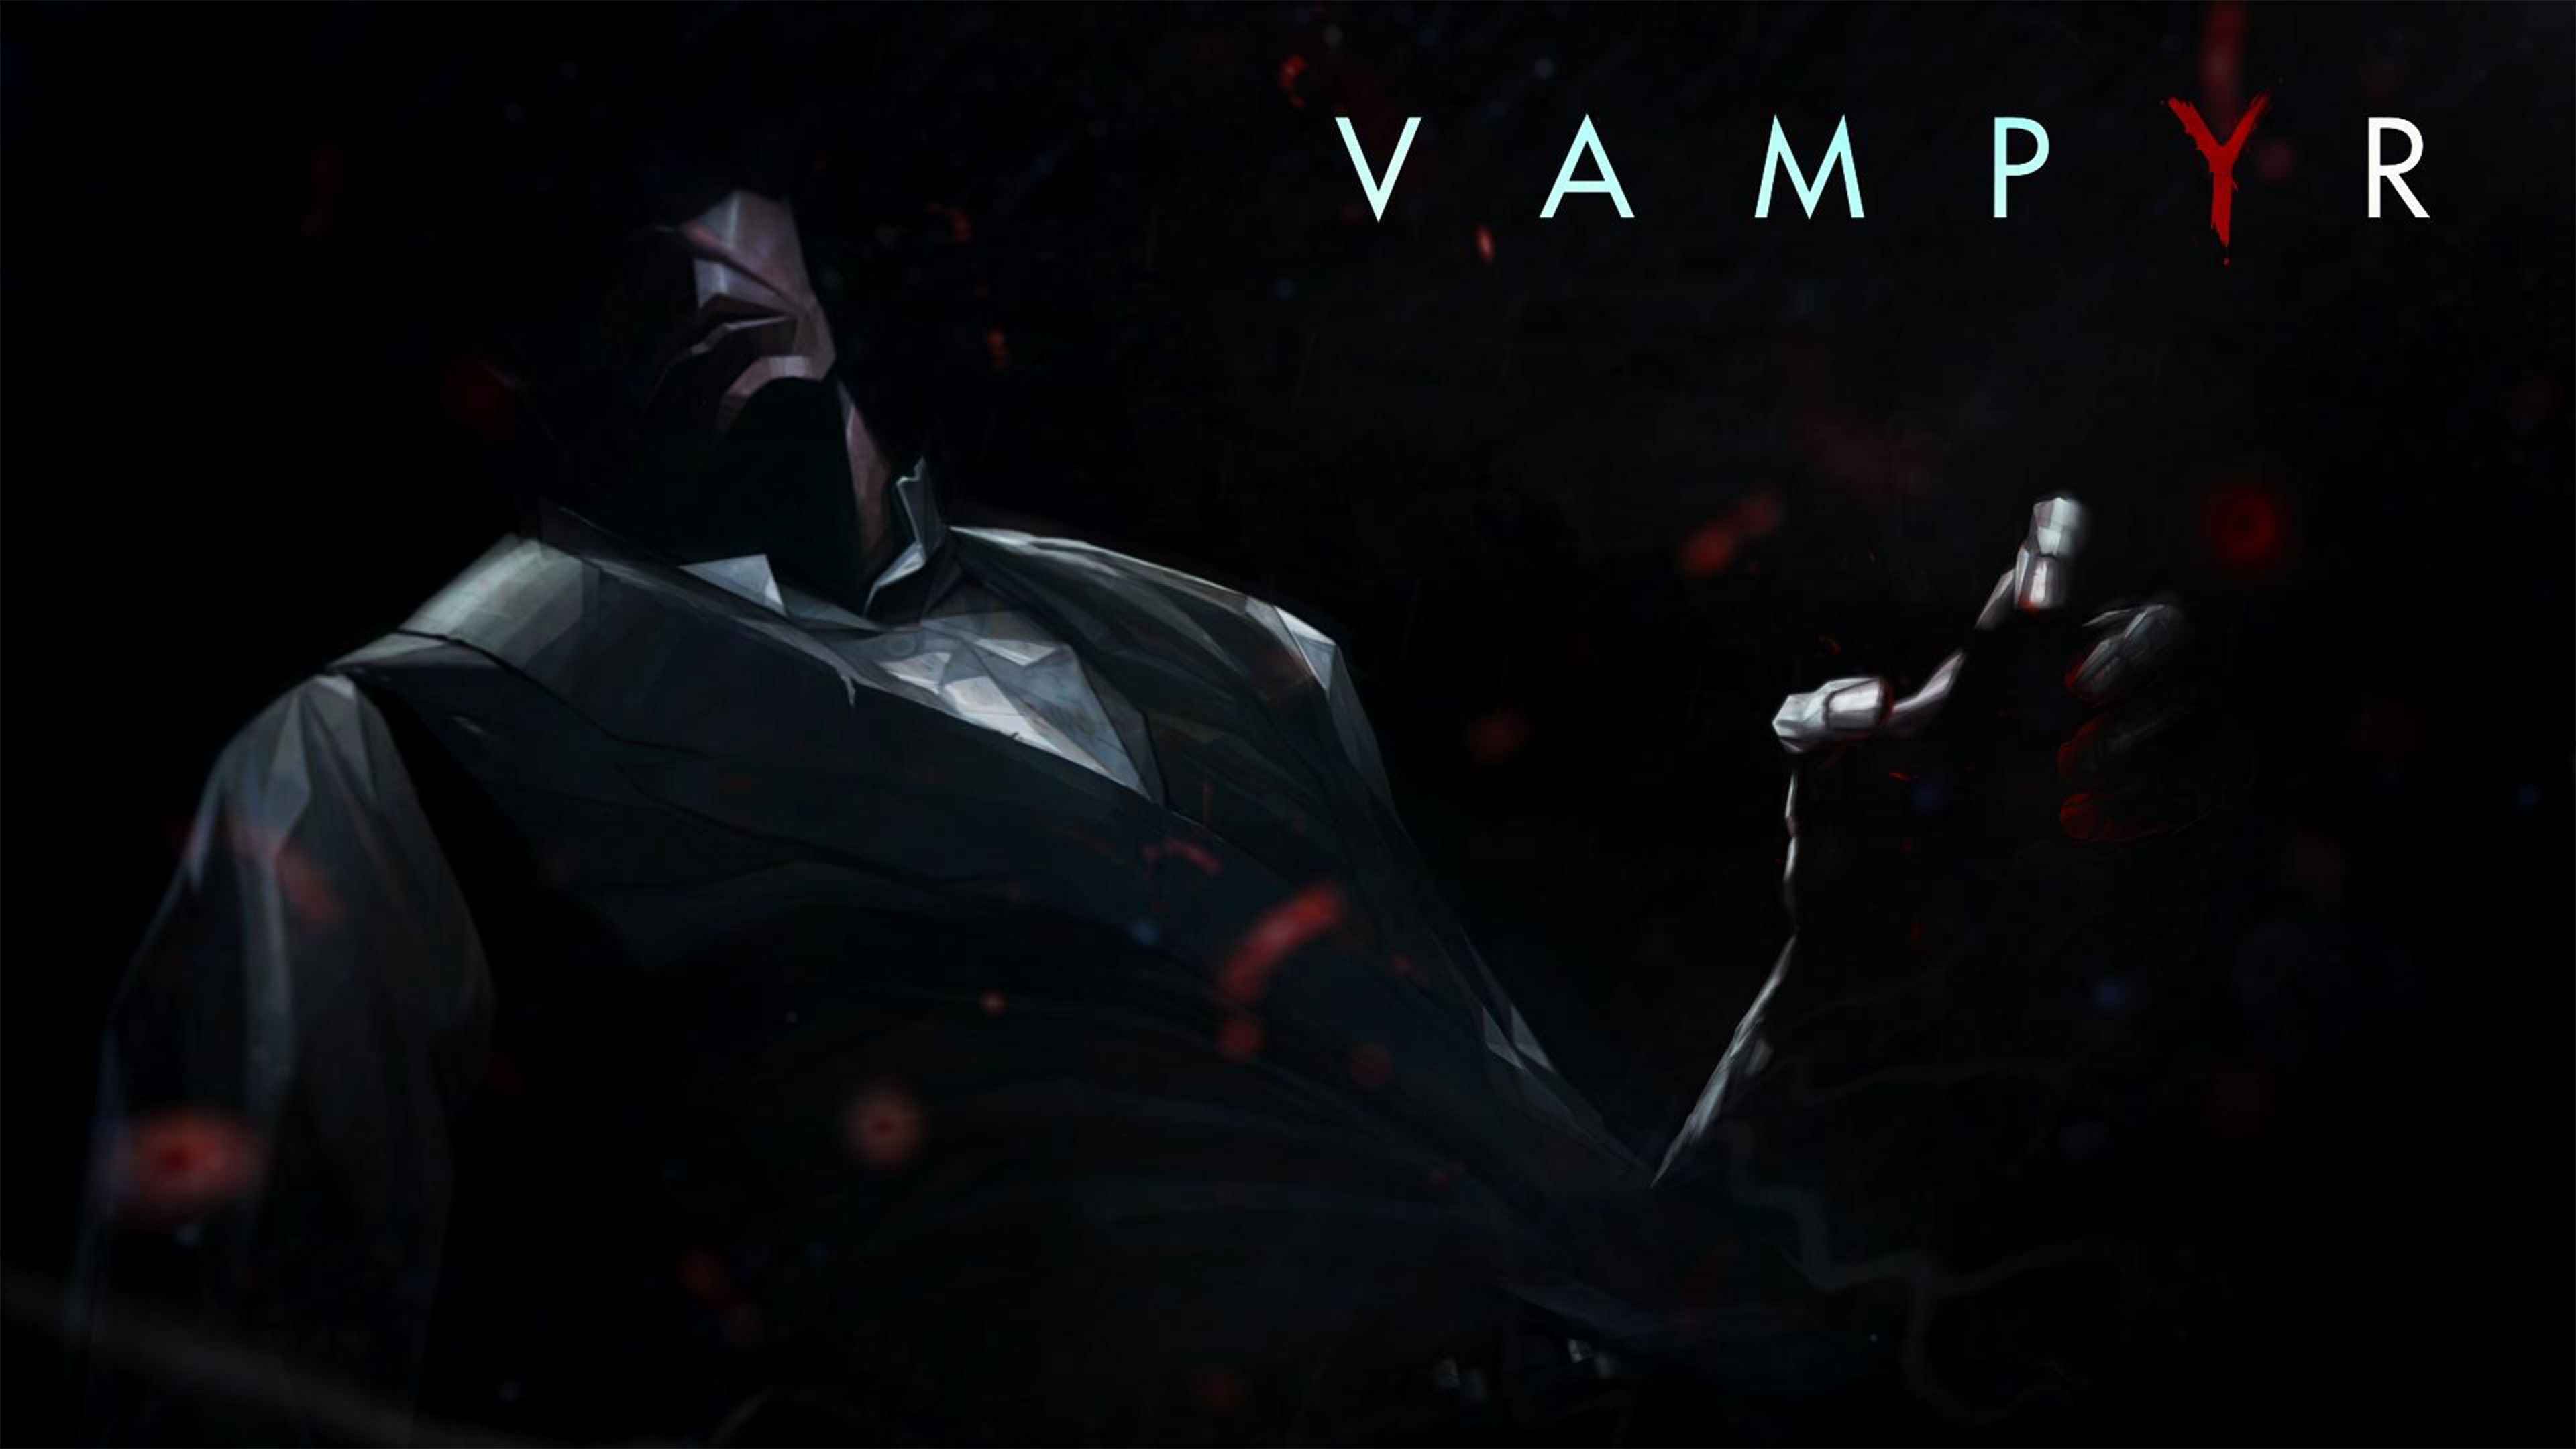 Vampyr Backgrounds on Wallpapers Vista